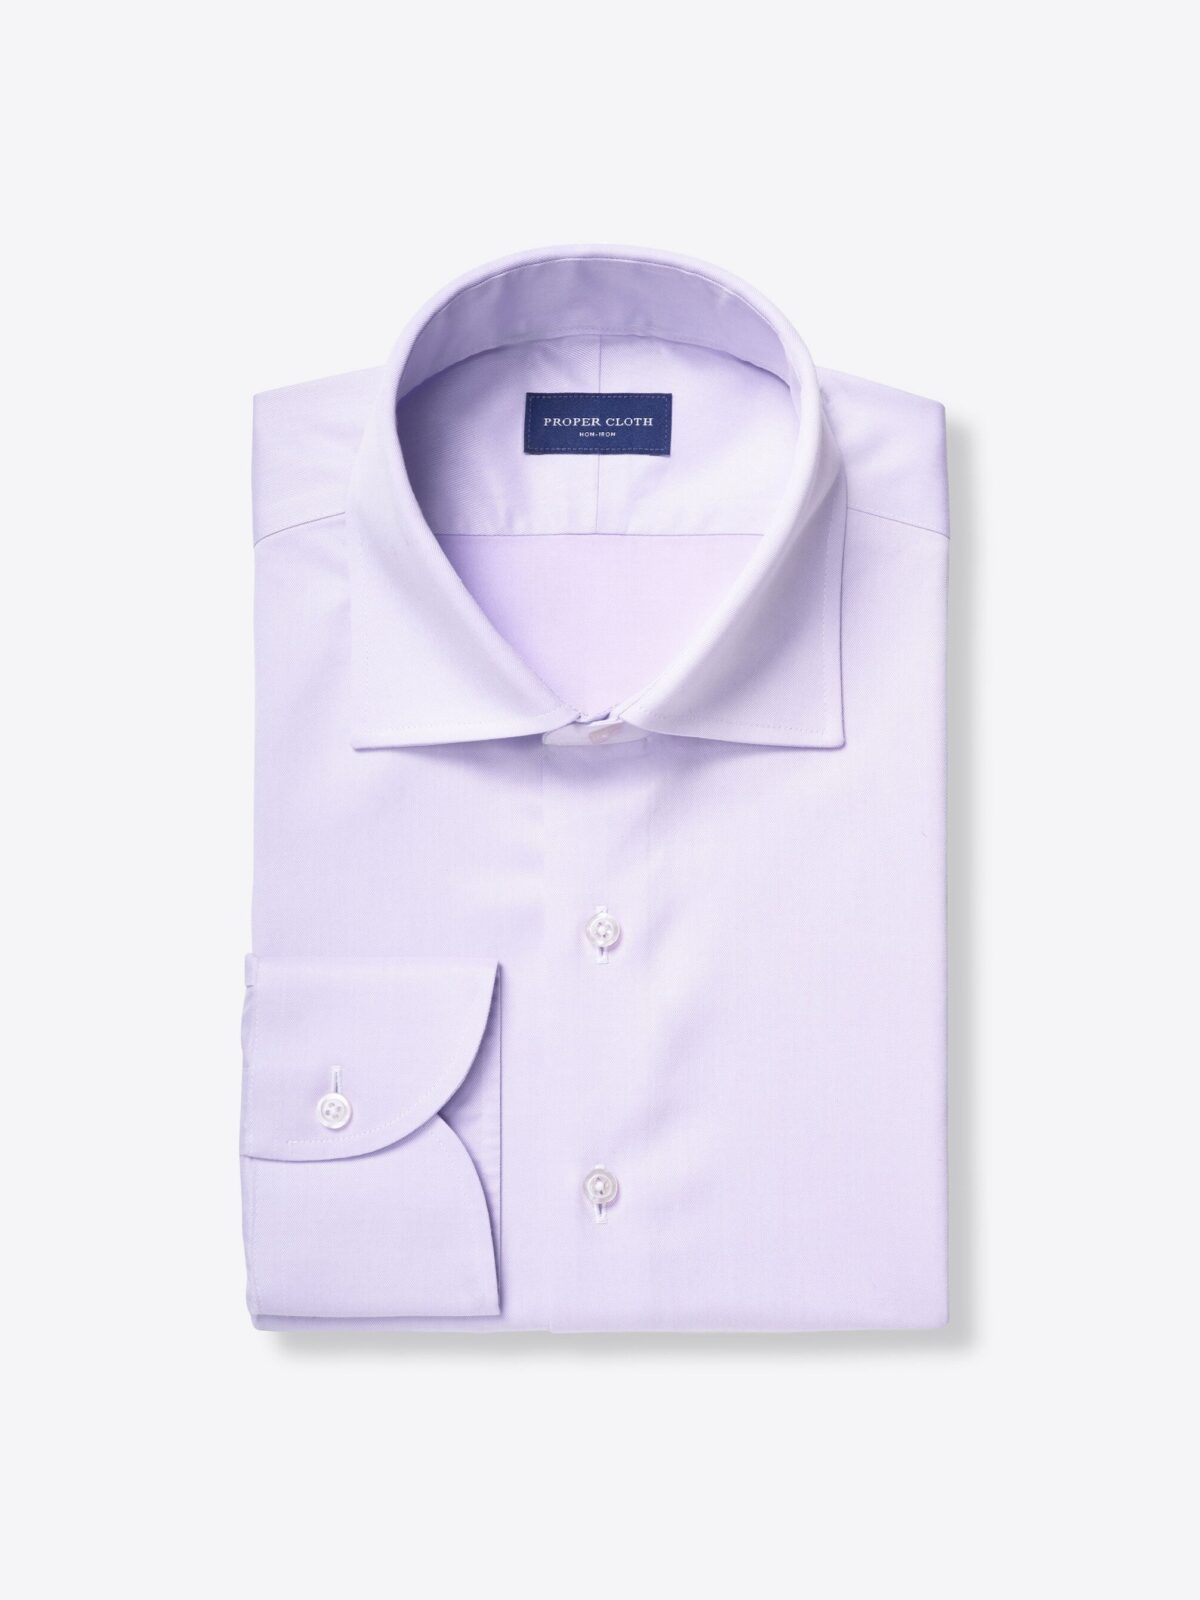 100 Plastic Collar Stays for Men's Dress Shirts - Shirt Collar